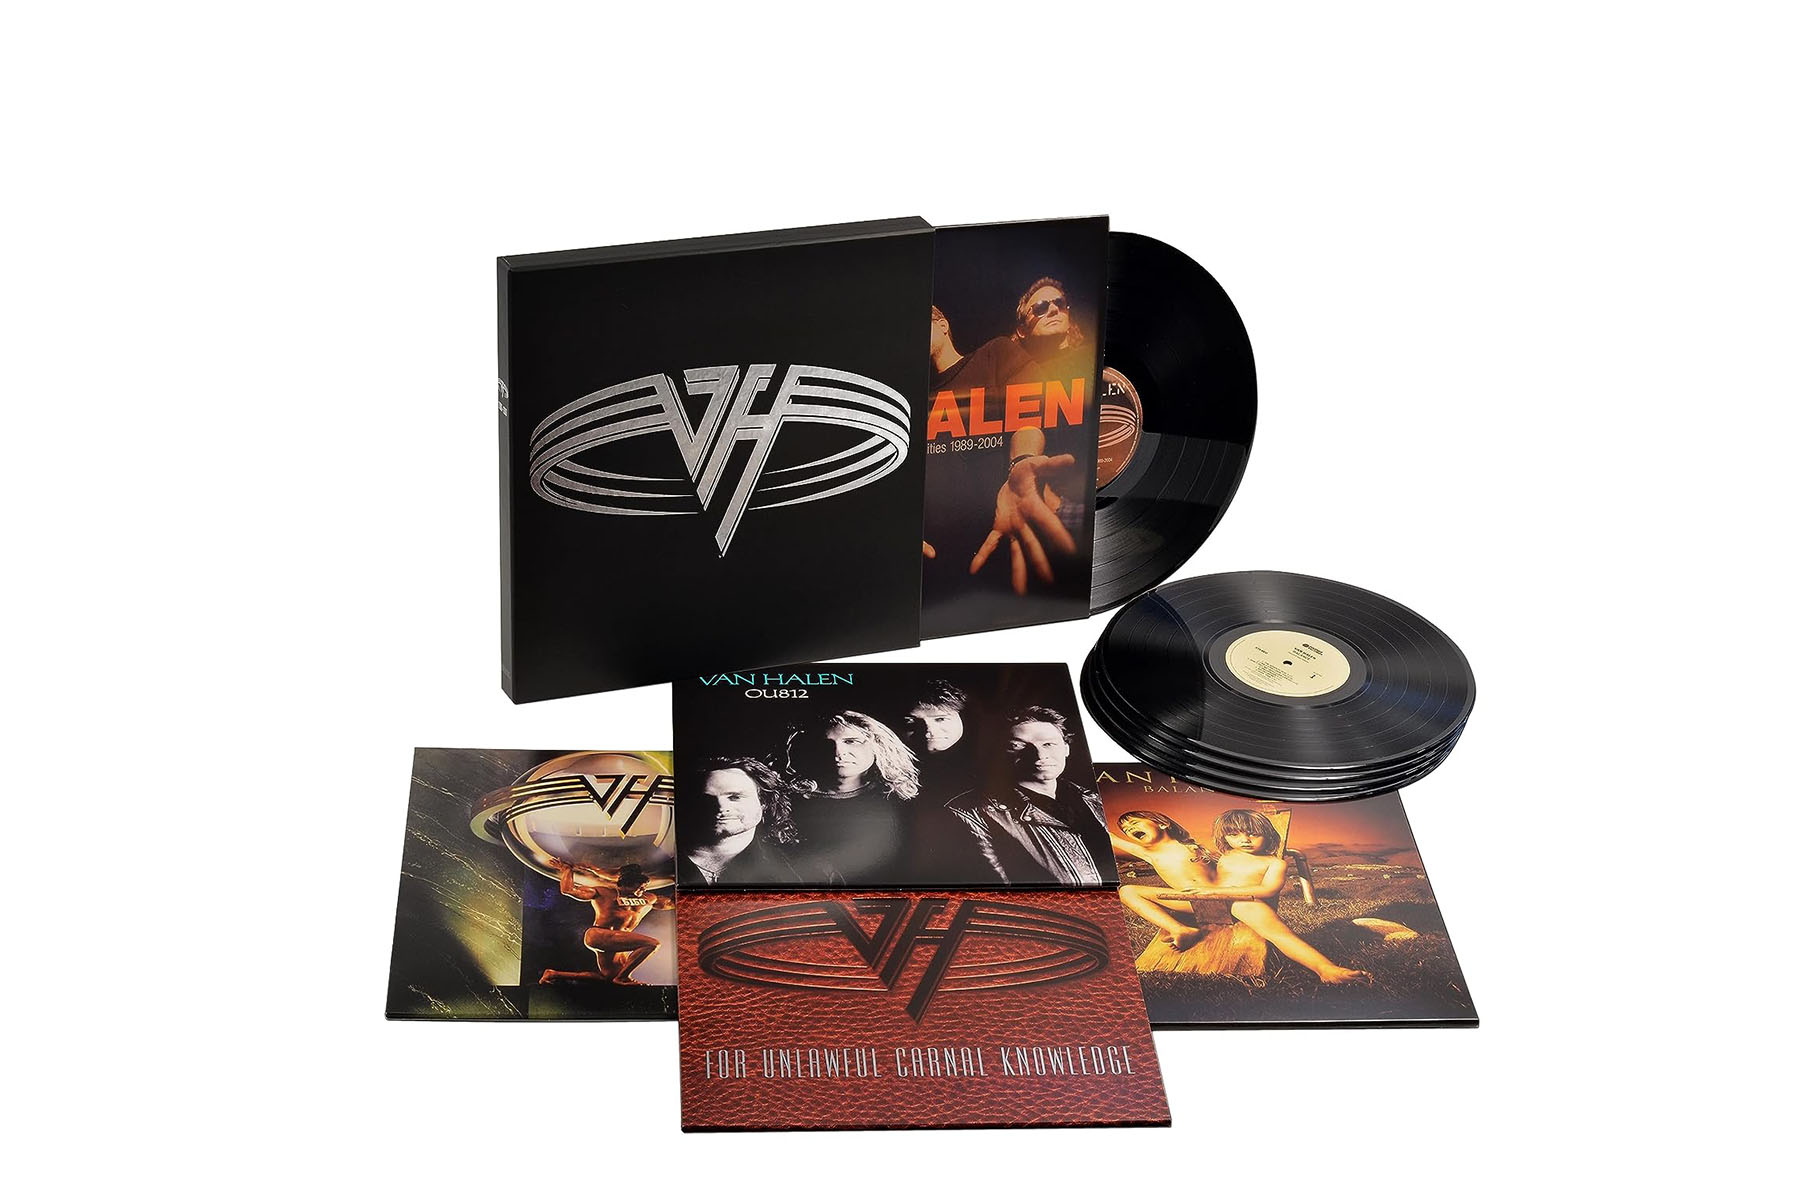 VAN HALEN Revisits SAMMY HAGAR Studio Years With CD/Vinyl BoxSet 'The  Collection II